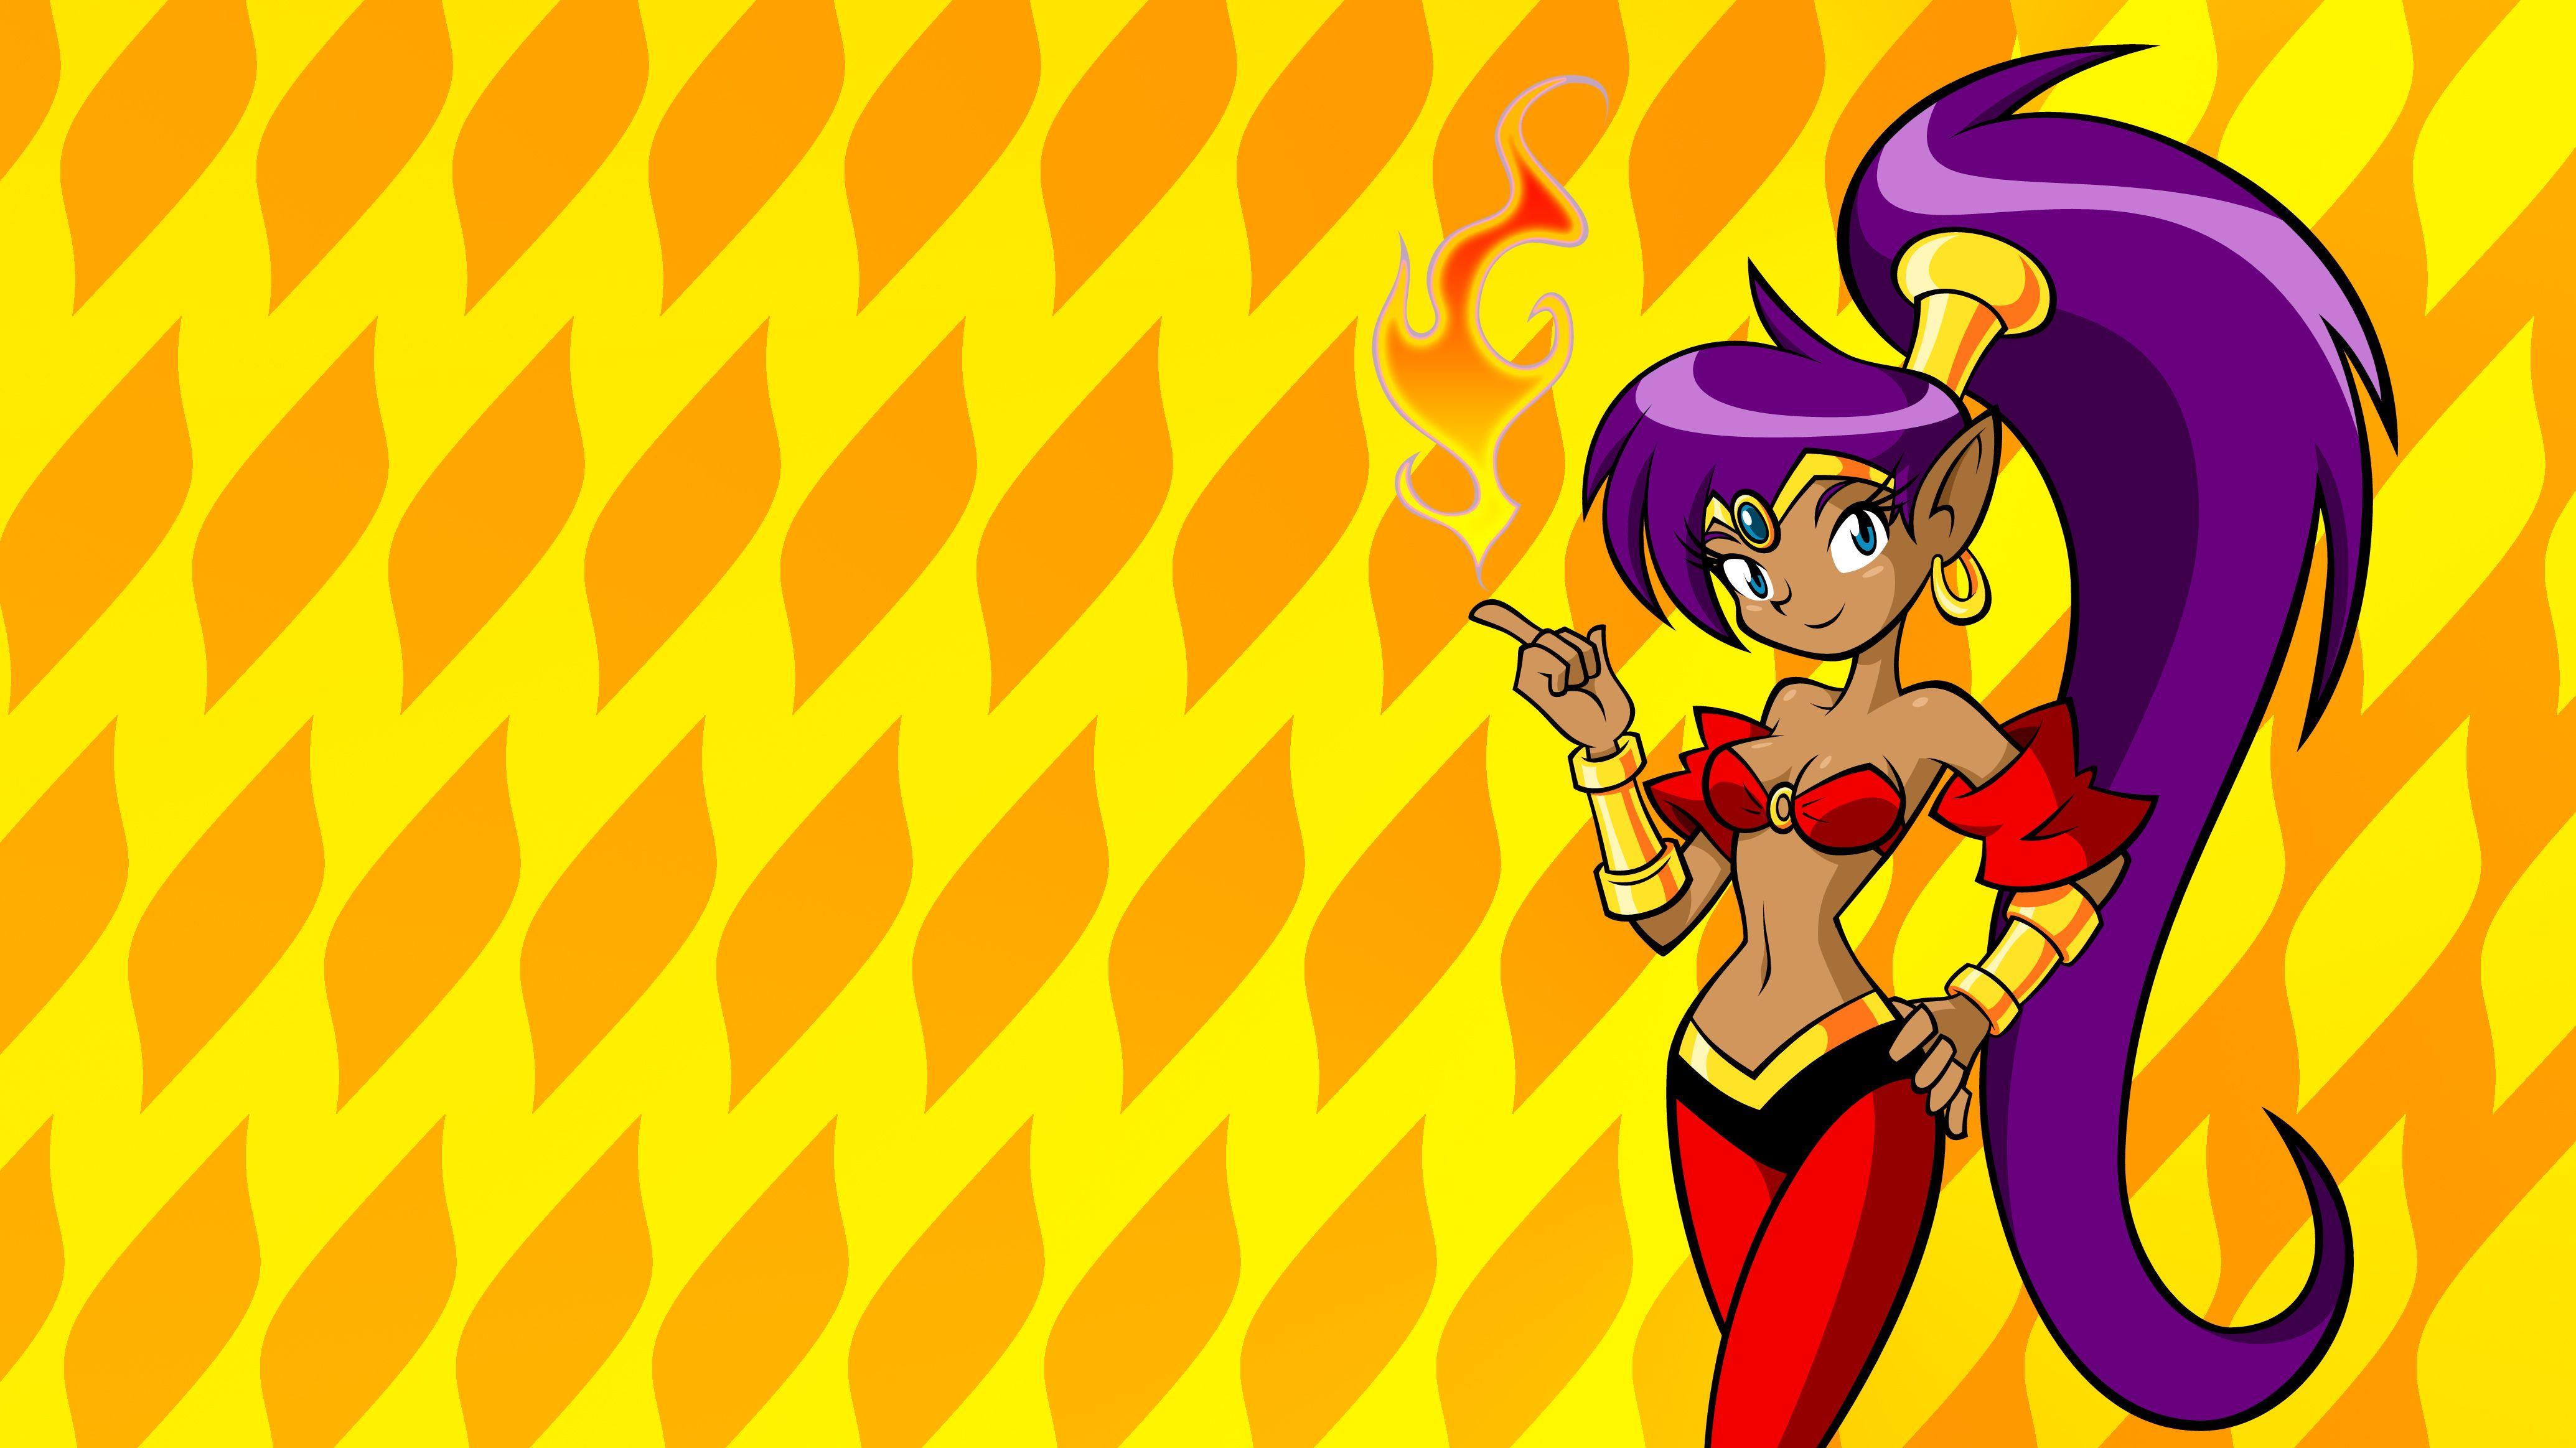 Shantae: Riskys Revenge 4k Ultra HD Wallpaper. Background Image